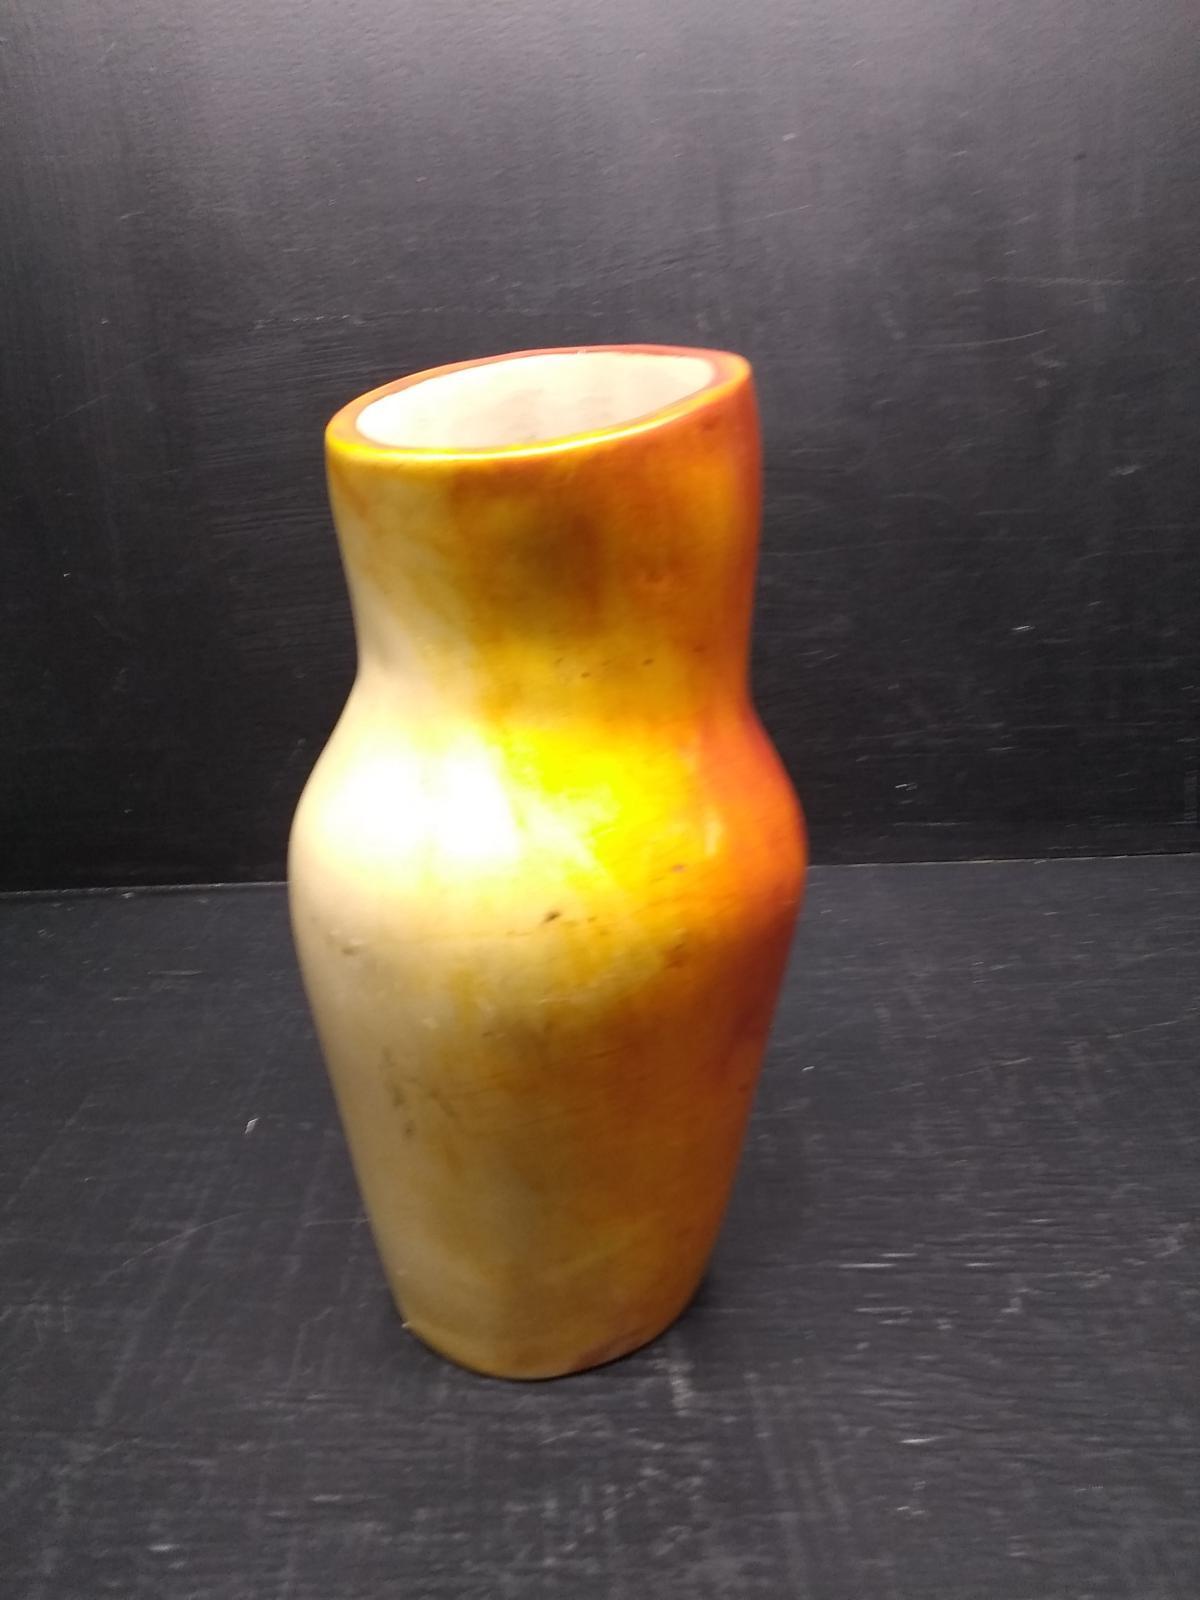 African Soapstone Vase (very heavy)